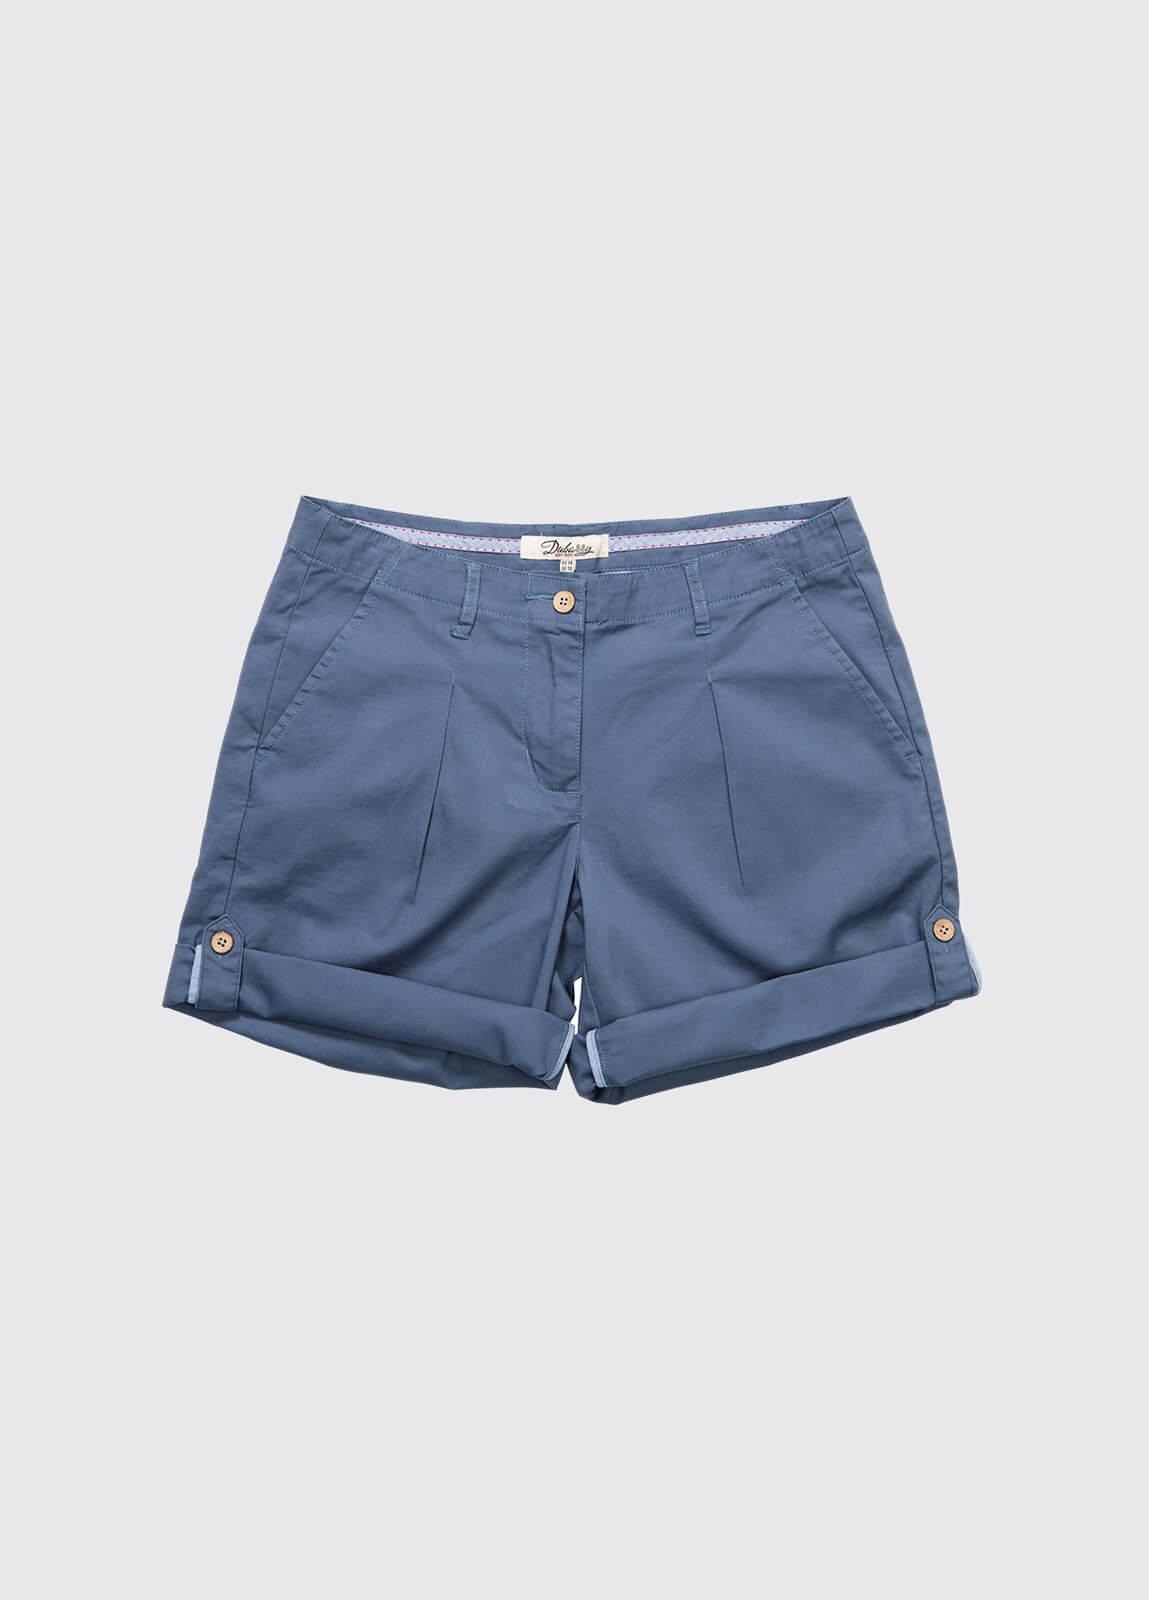 Summerhill ladies shorts - Denim